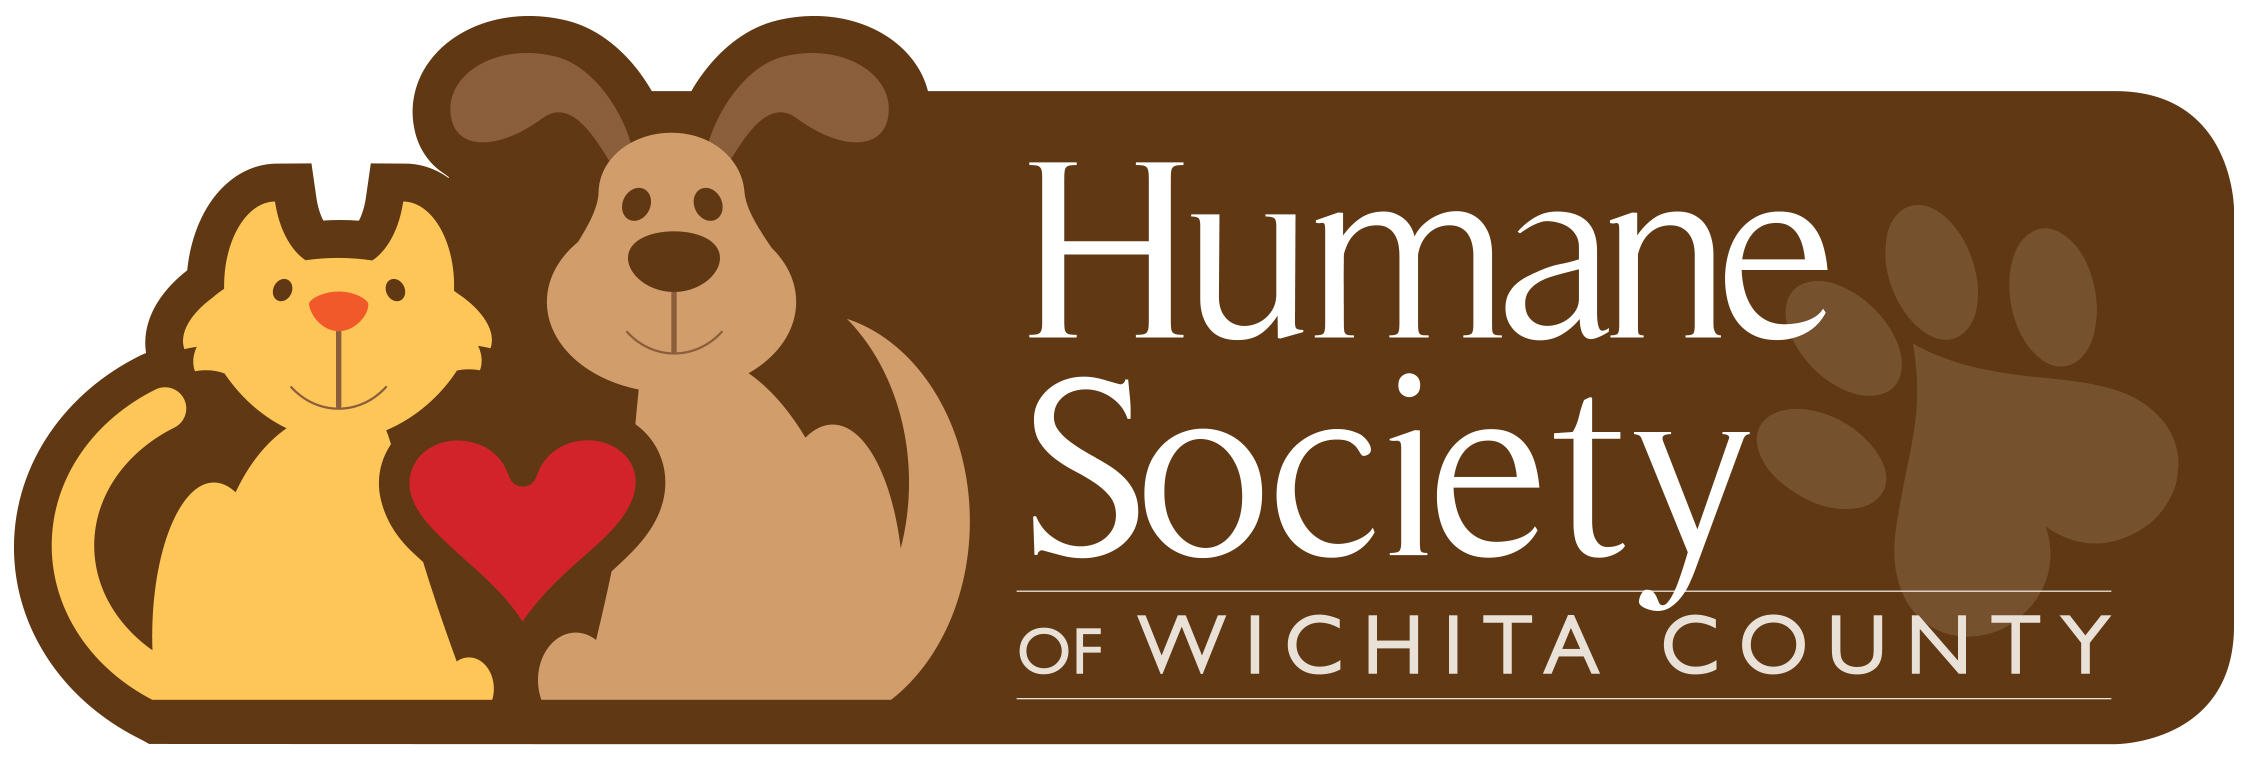 Humane Society of Wichita County 